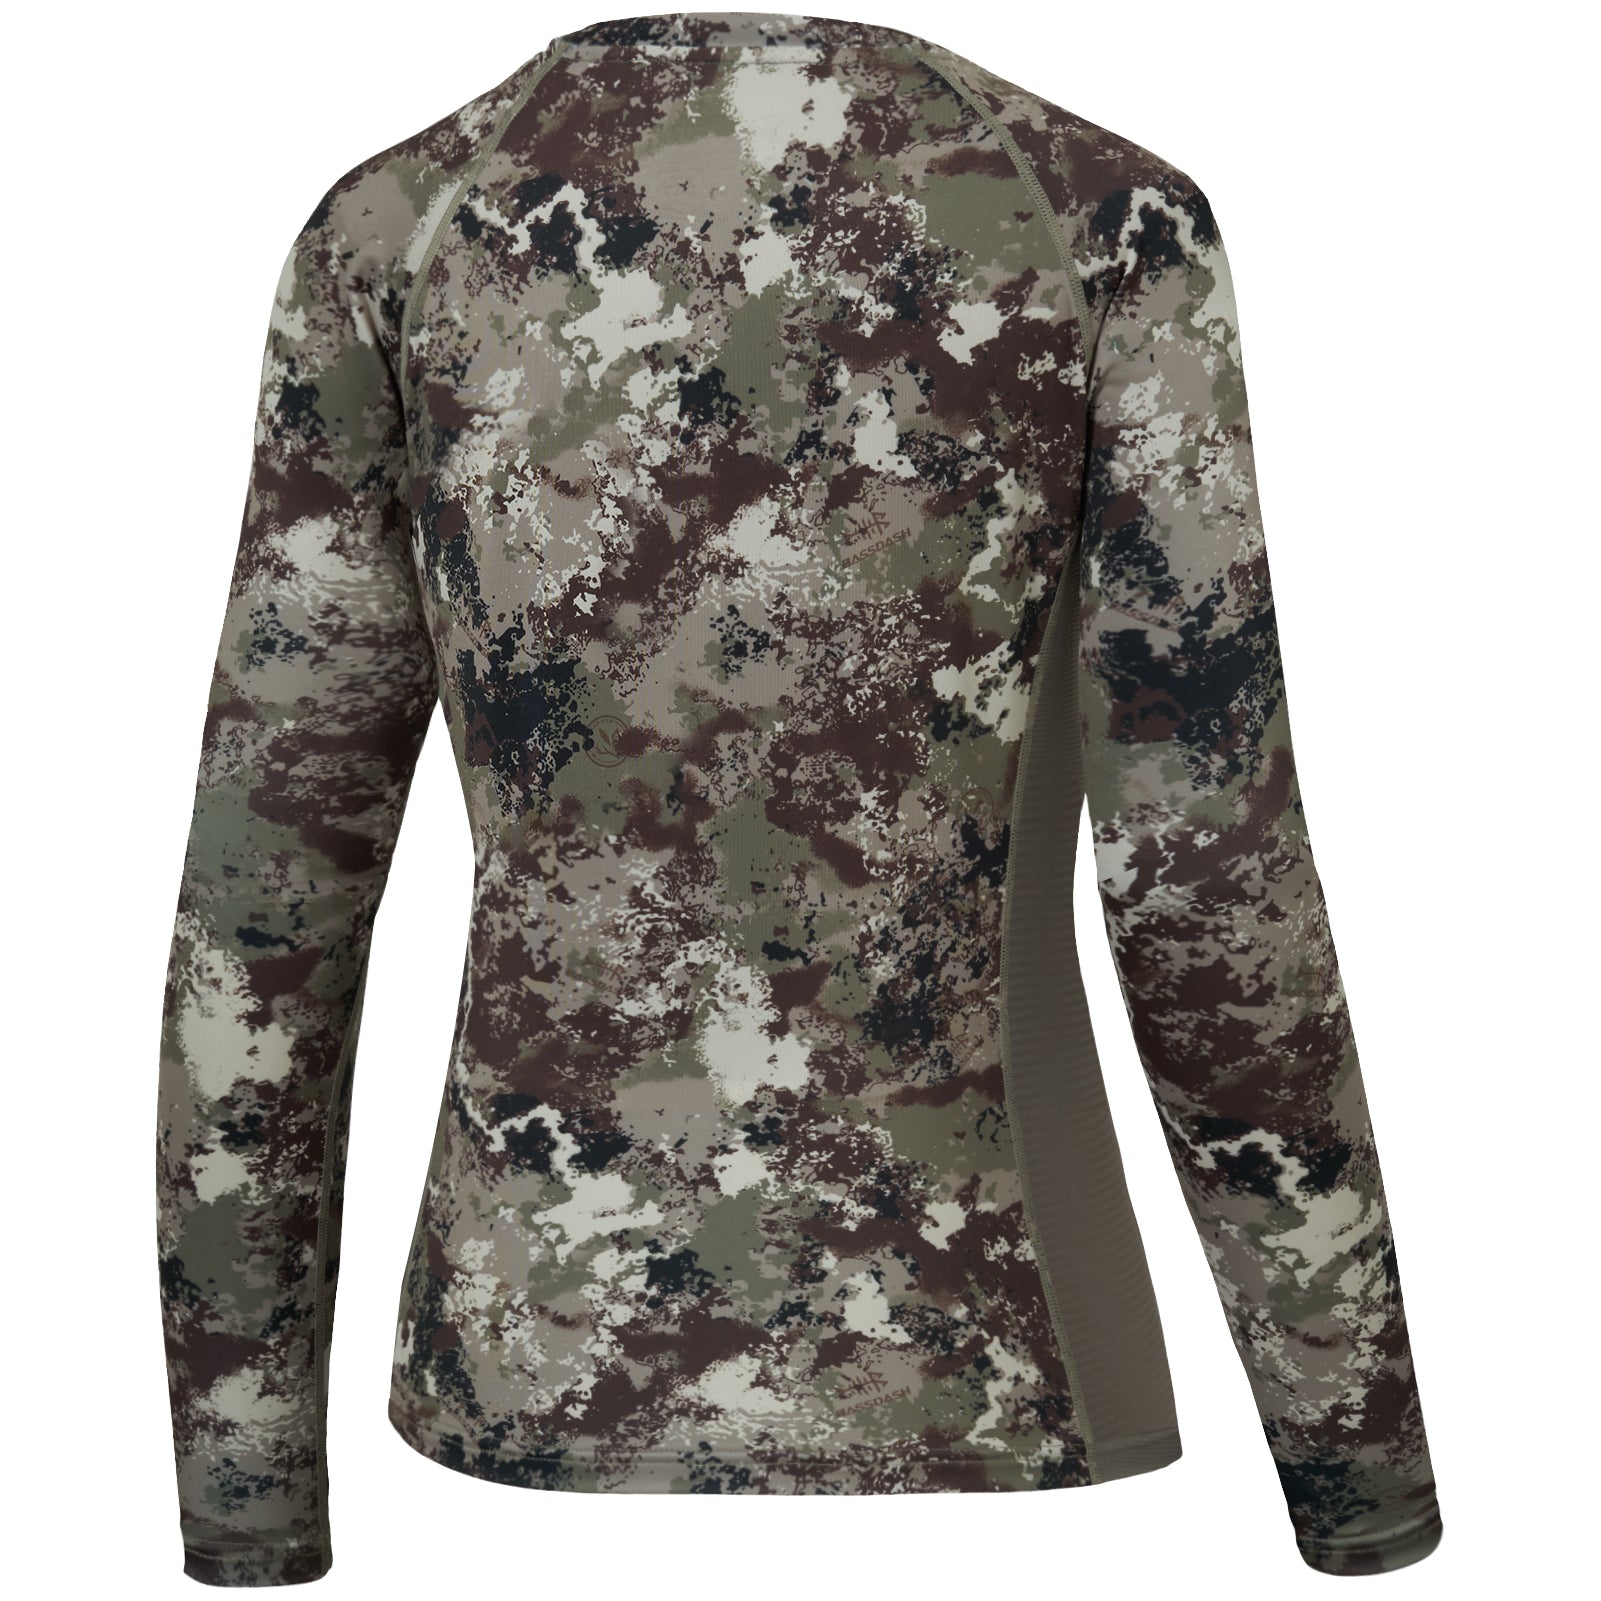 Women's Hunting Camo Long Sleeve UV Shirts FS13W, Grunge Camo / X-Small